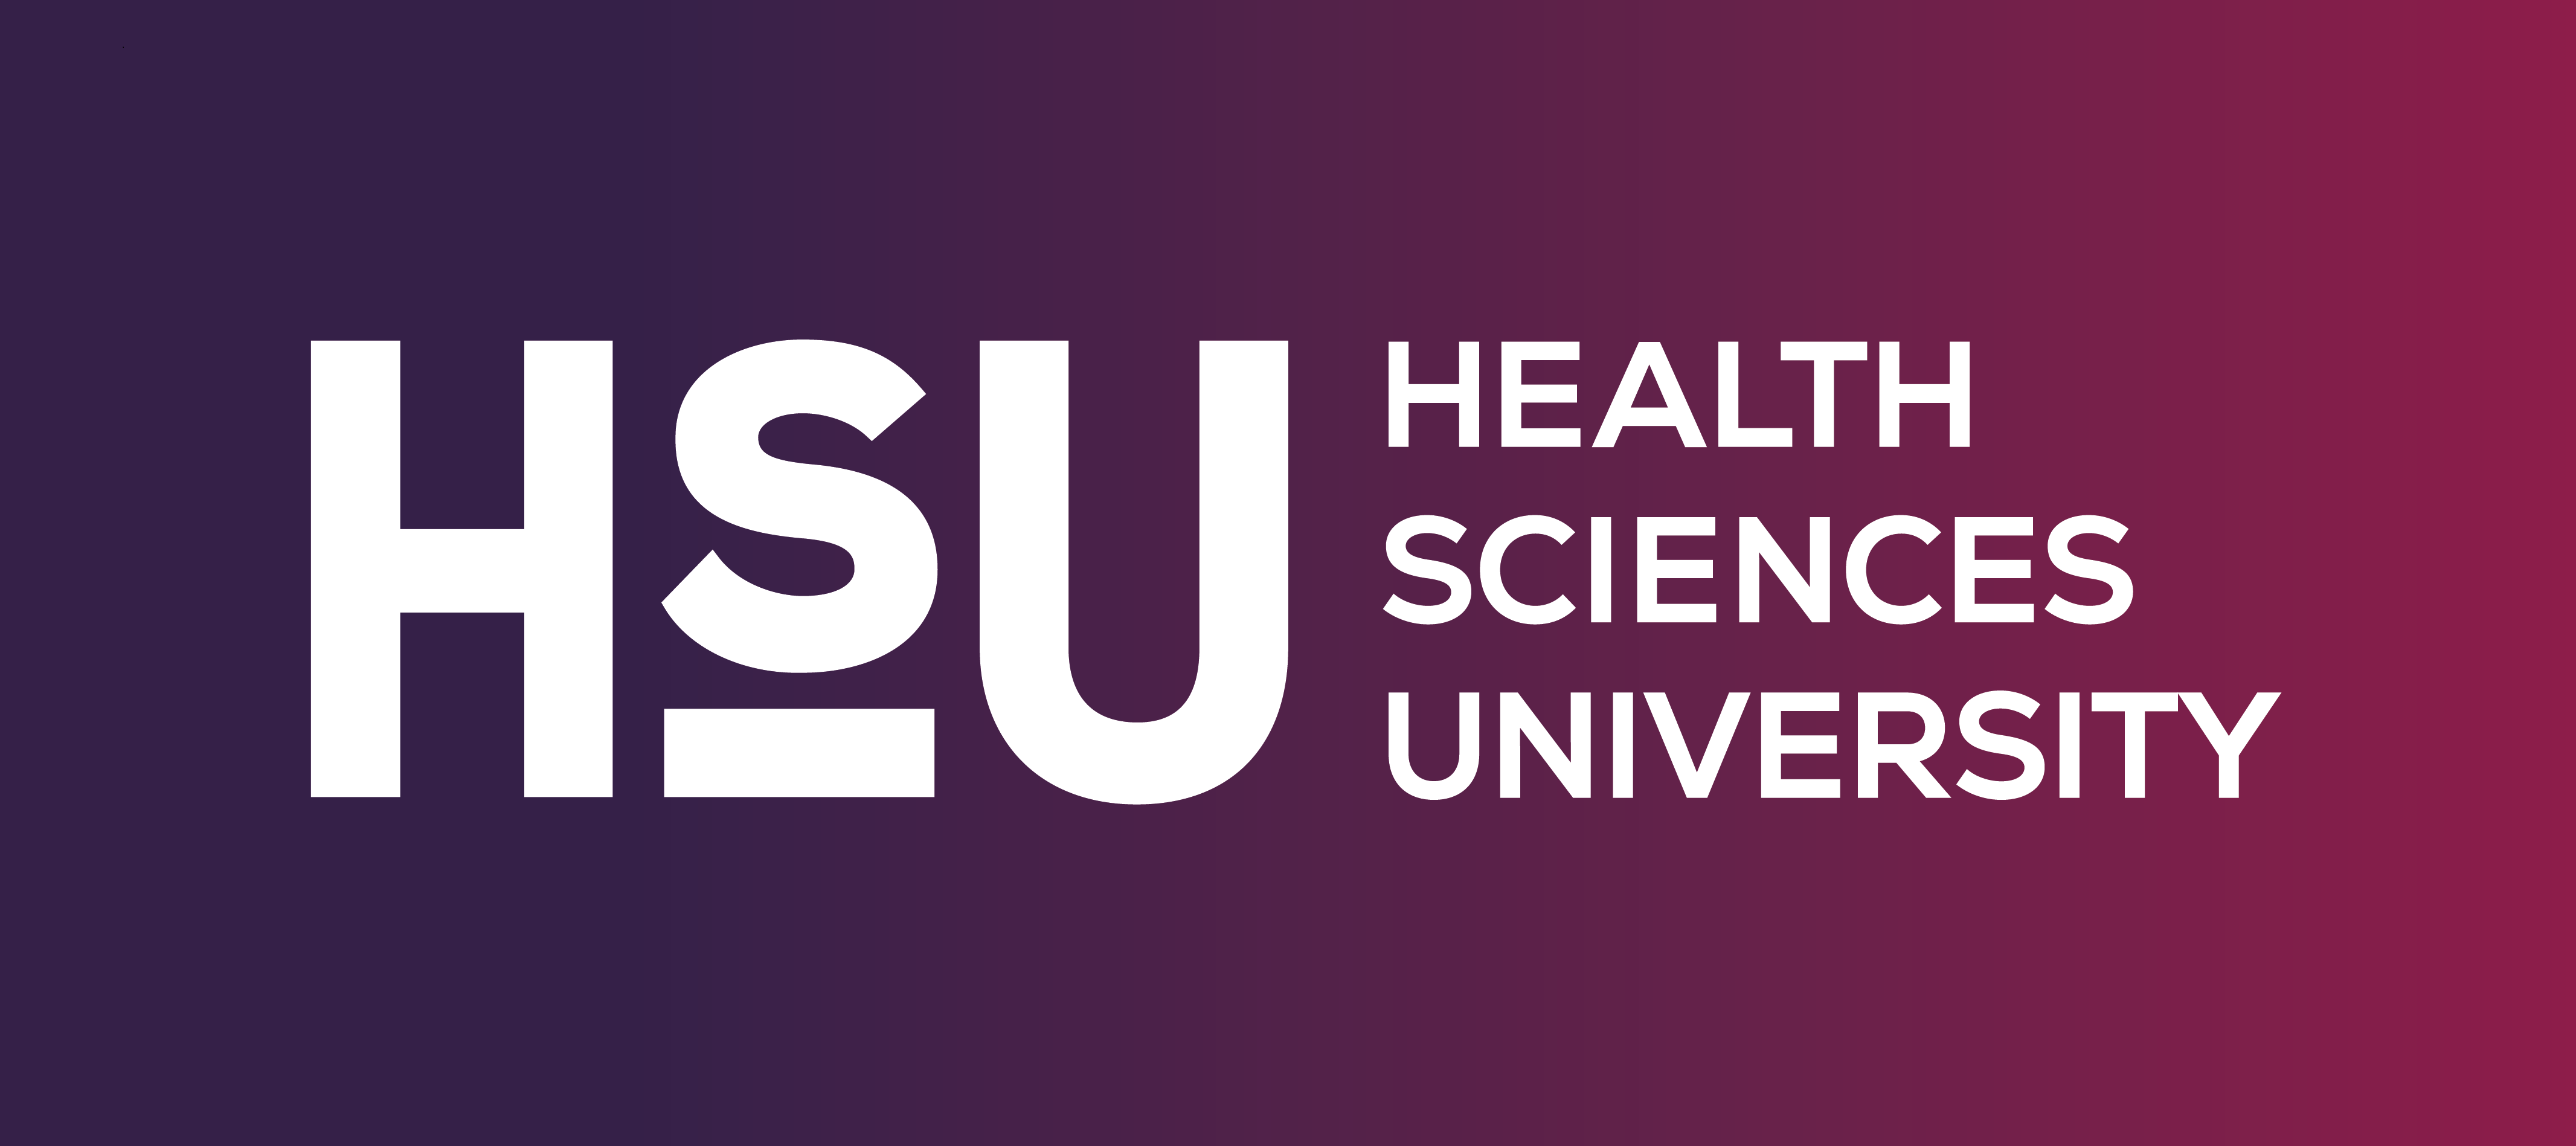 HSU resized email banner